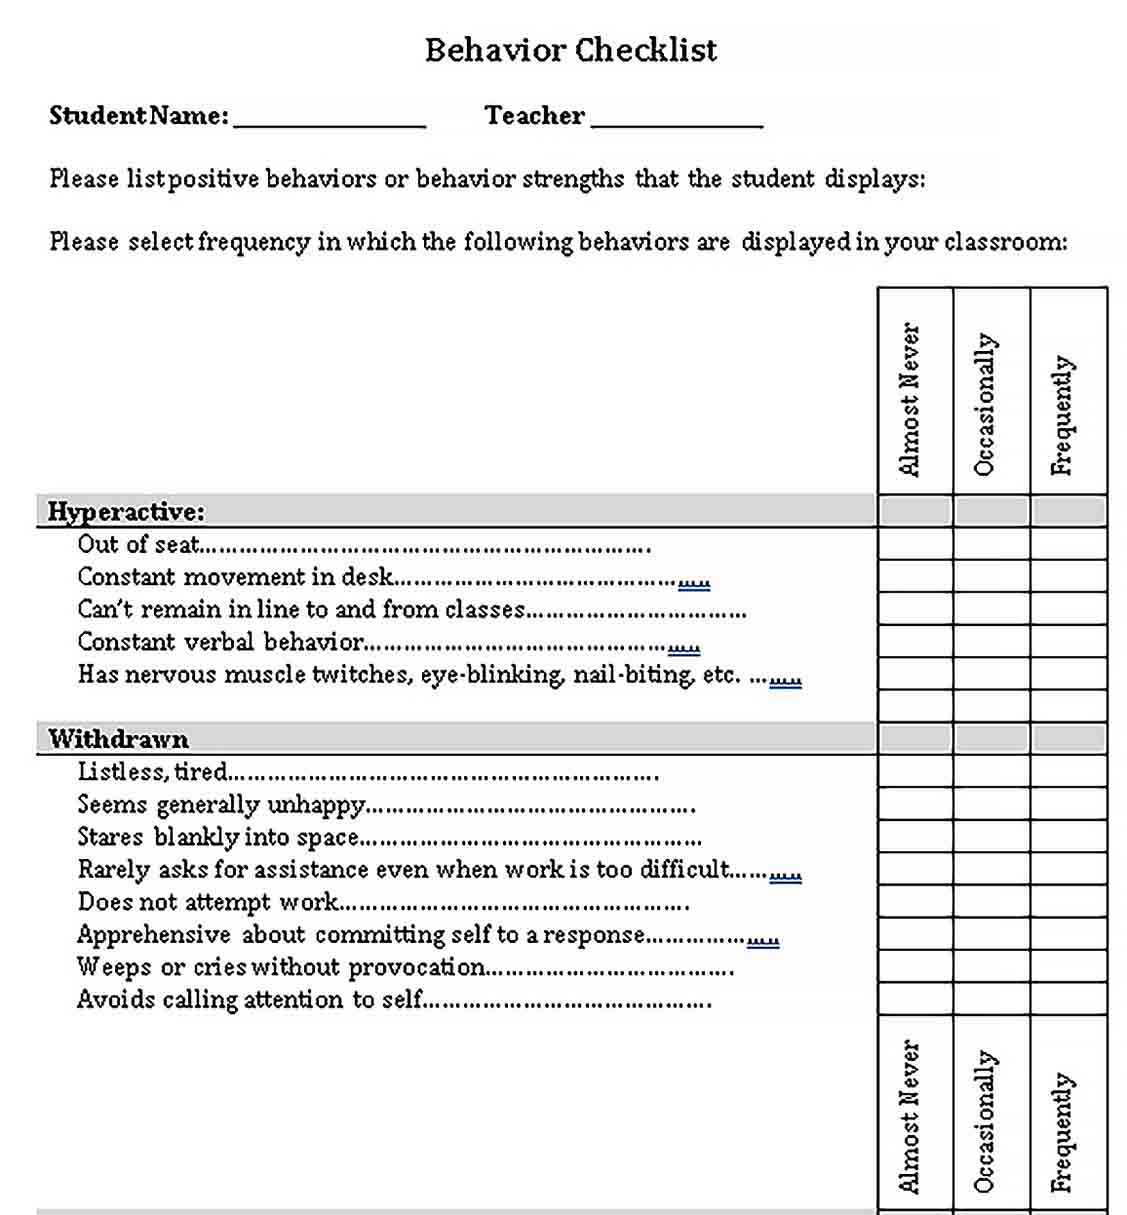 Student Checklist Template - bcjournal Intended For Teacher Checklist Template For Assessment